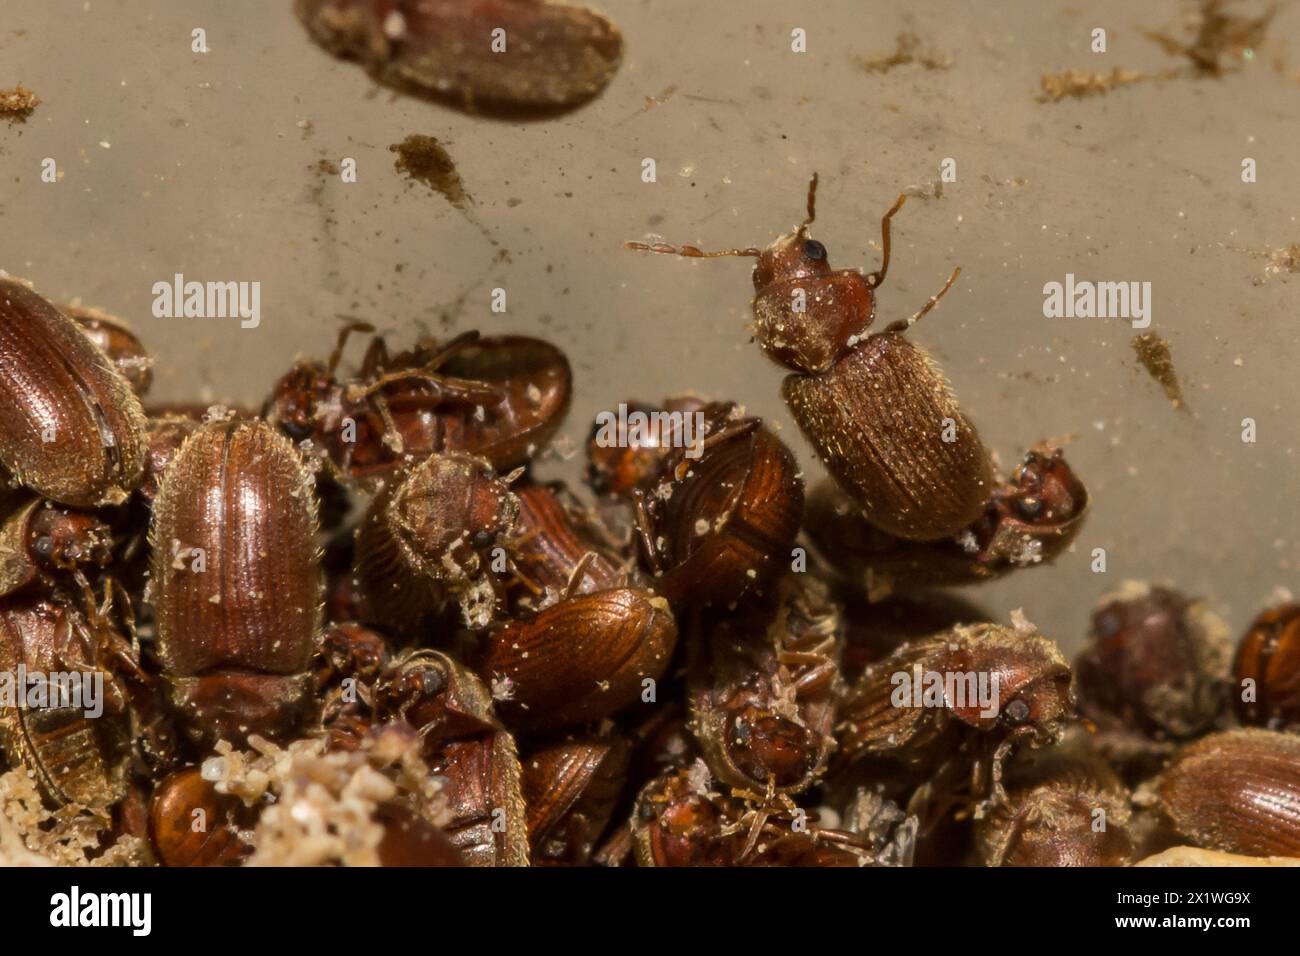 Drugstore Beetles - Stegobium paniceum Stock Photo